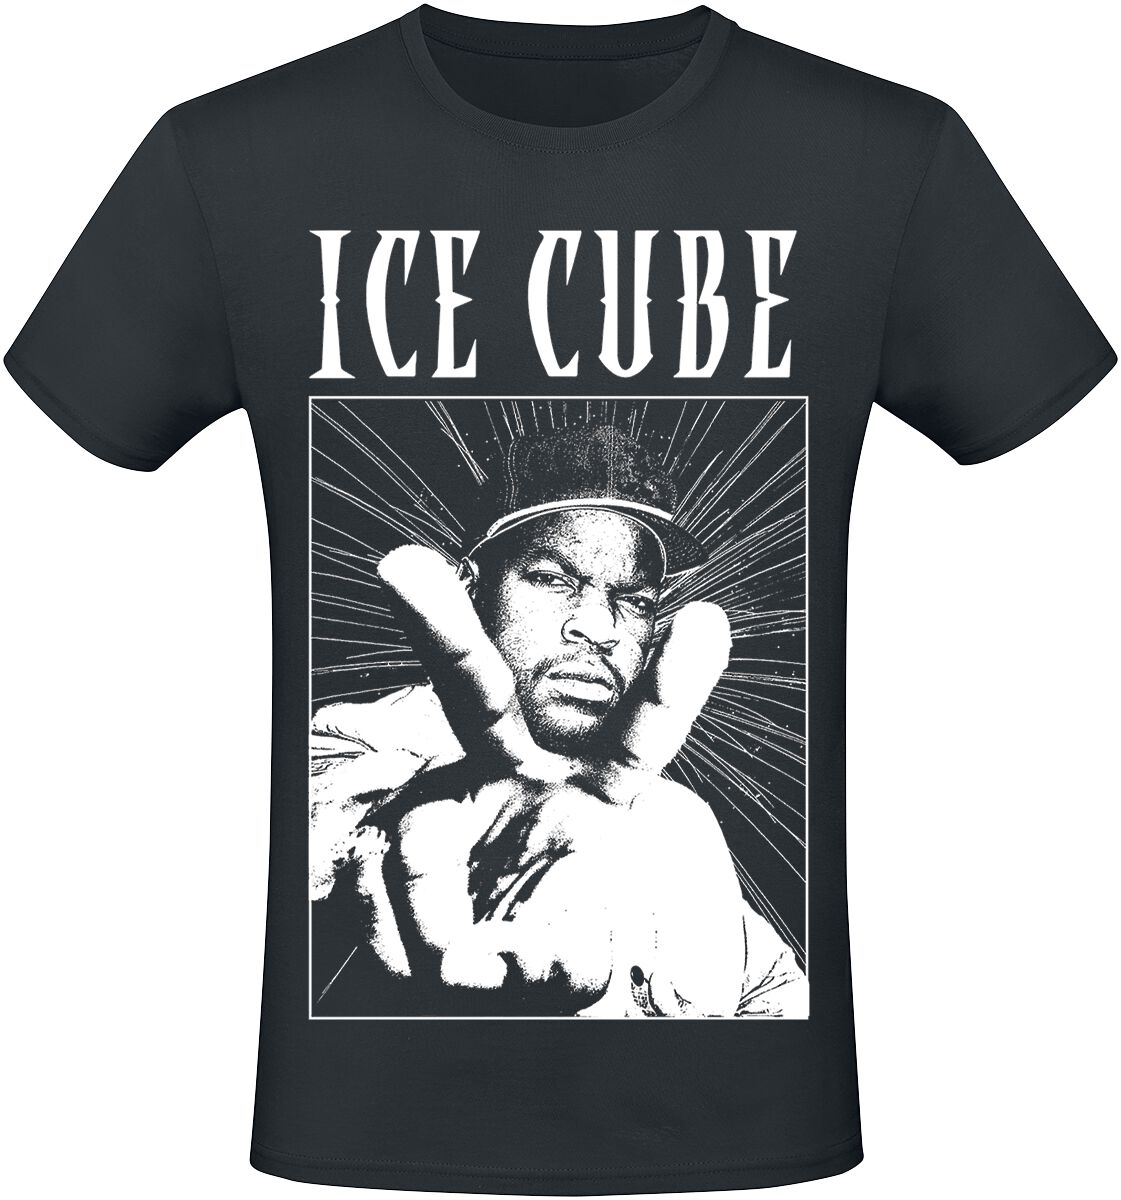 ice cube t-shirt - peace sign - s bis xxl - fÃ¼r mÃ¤nner - grÃ¶ÃŸe s - - lizenziertes merchandise! schwarz